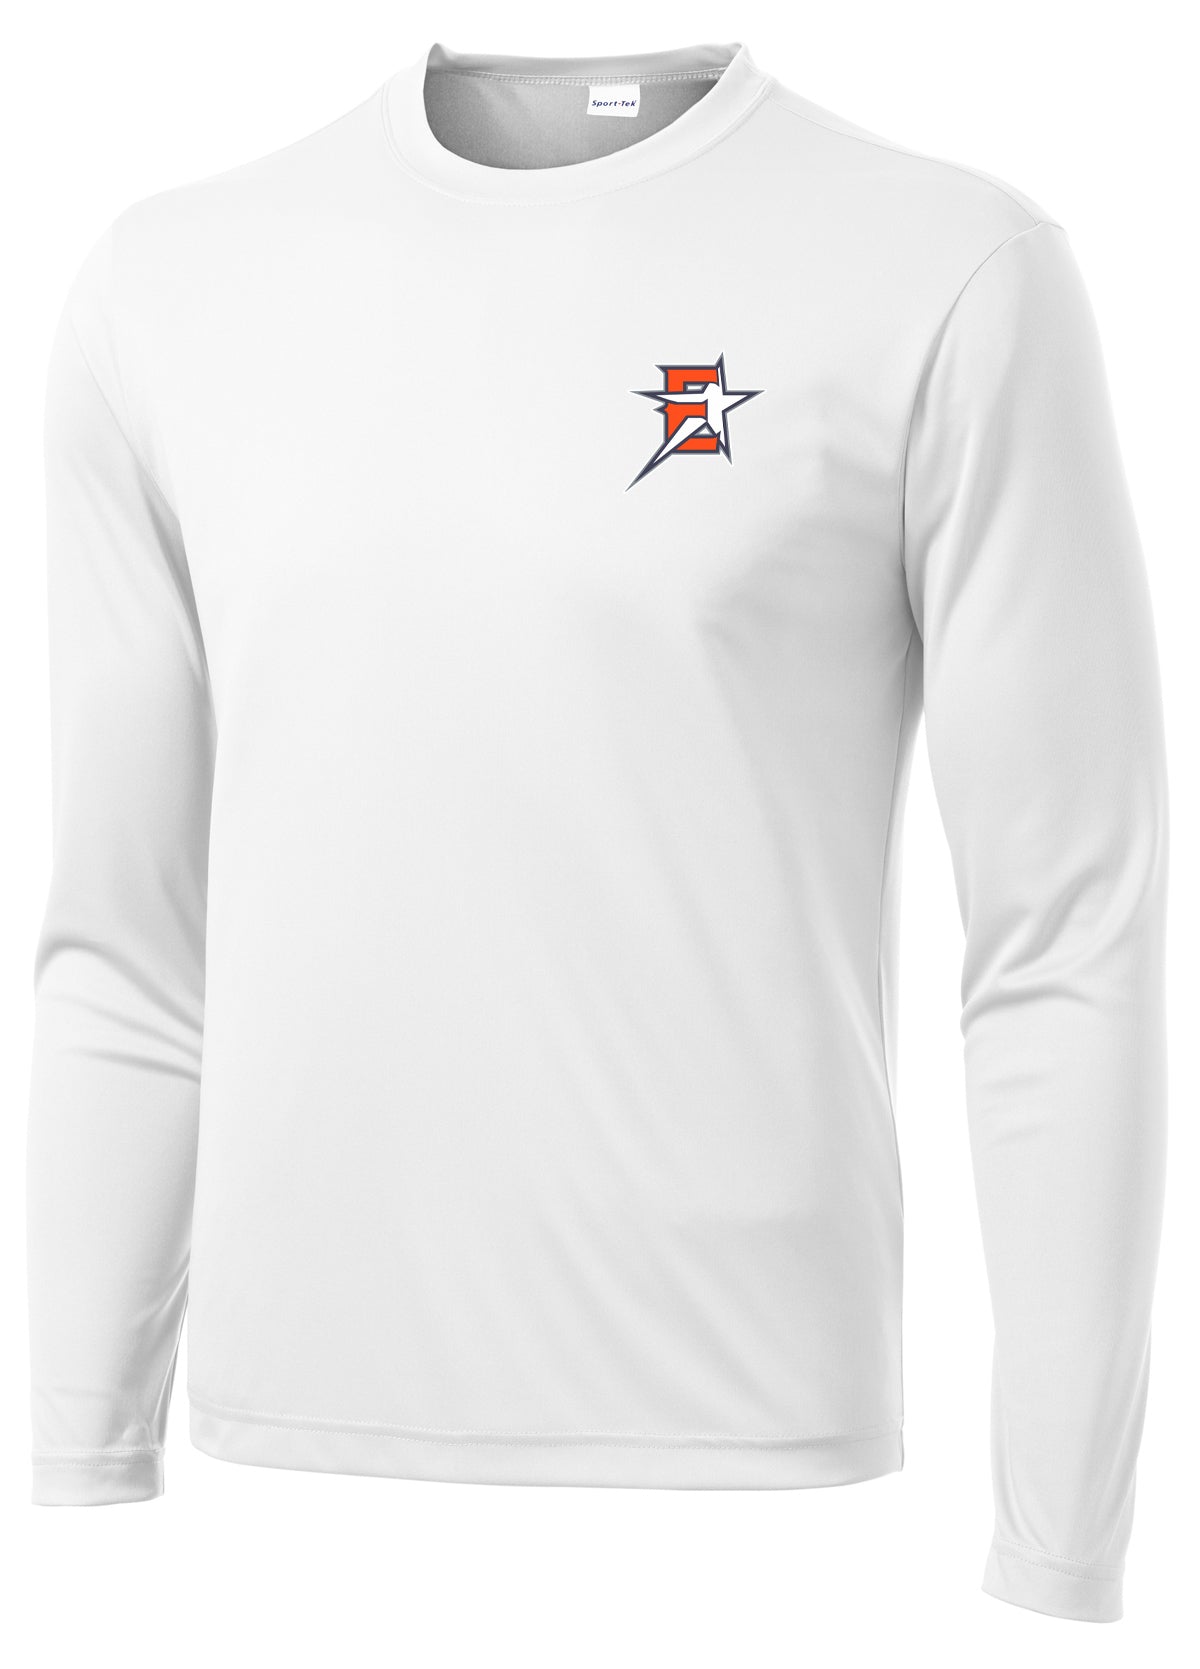 2019 Eastvale Girl's Softball Long Sleeve Performance Shirt